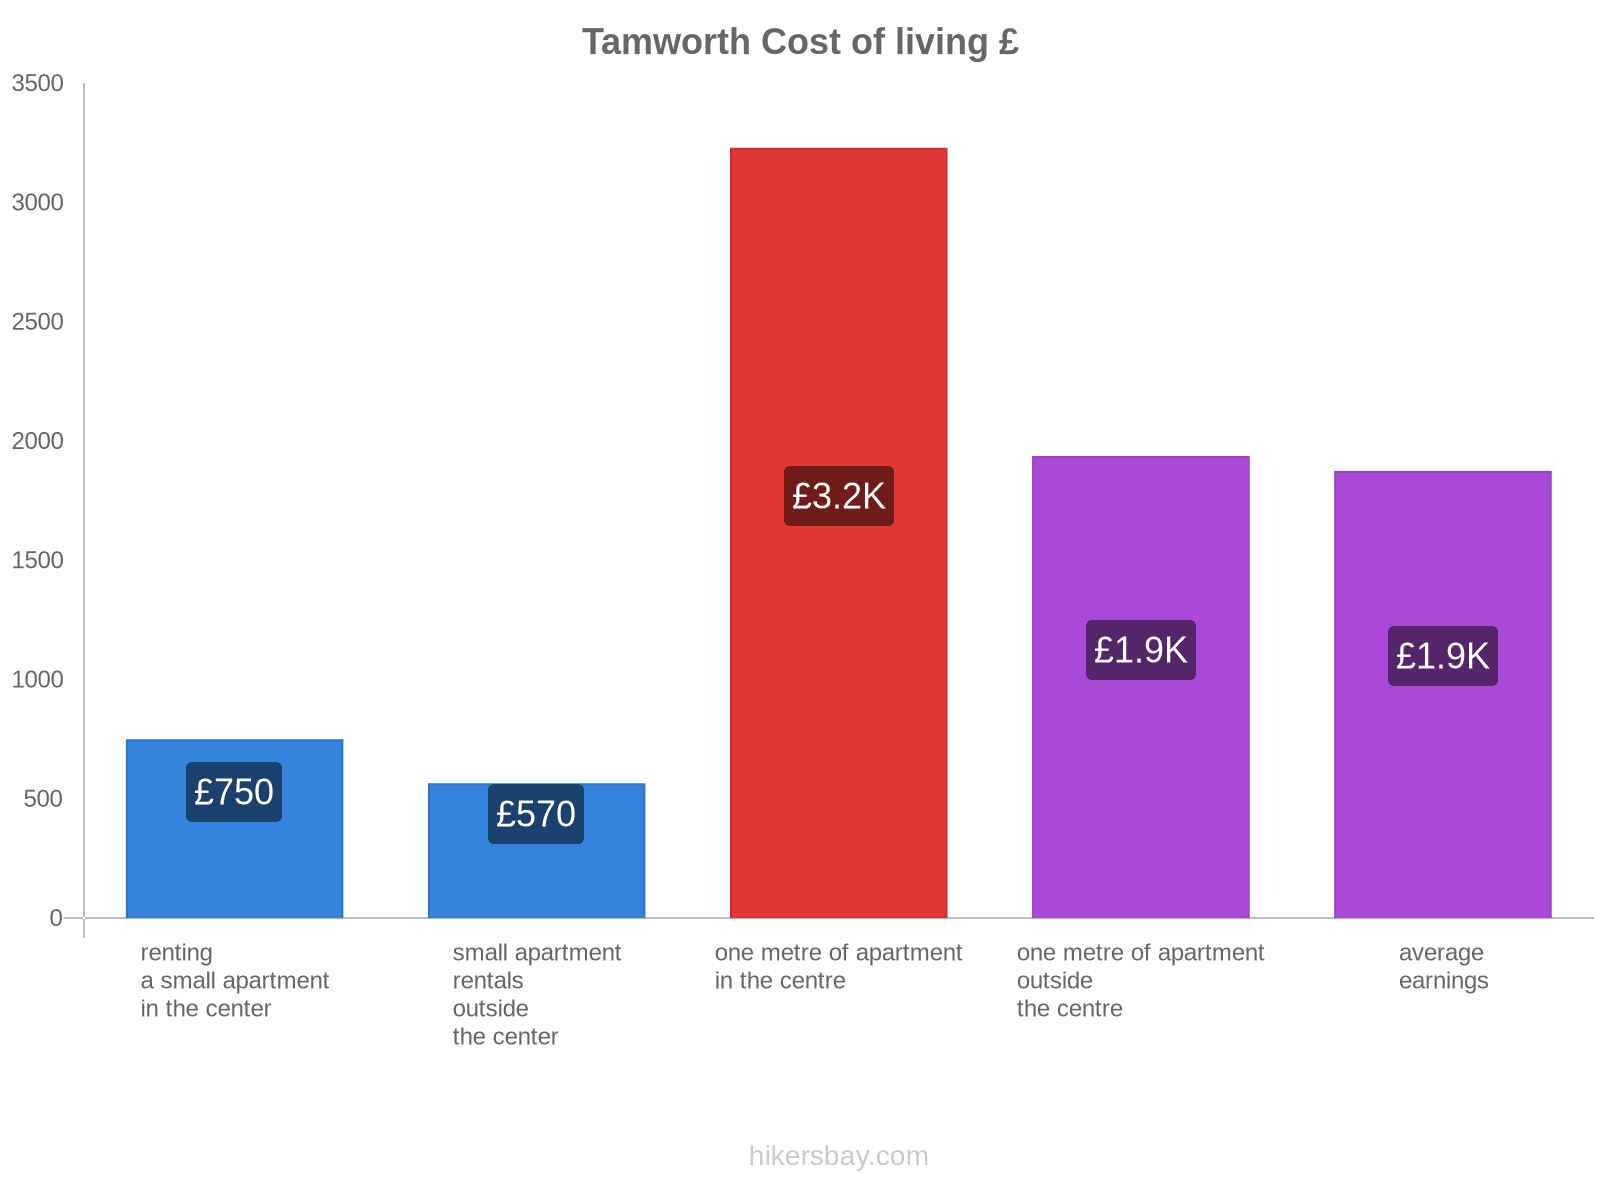 Tamworth cost of living hikersbay.com